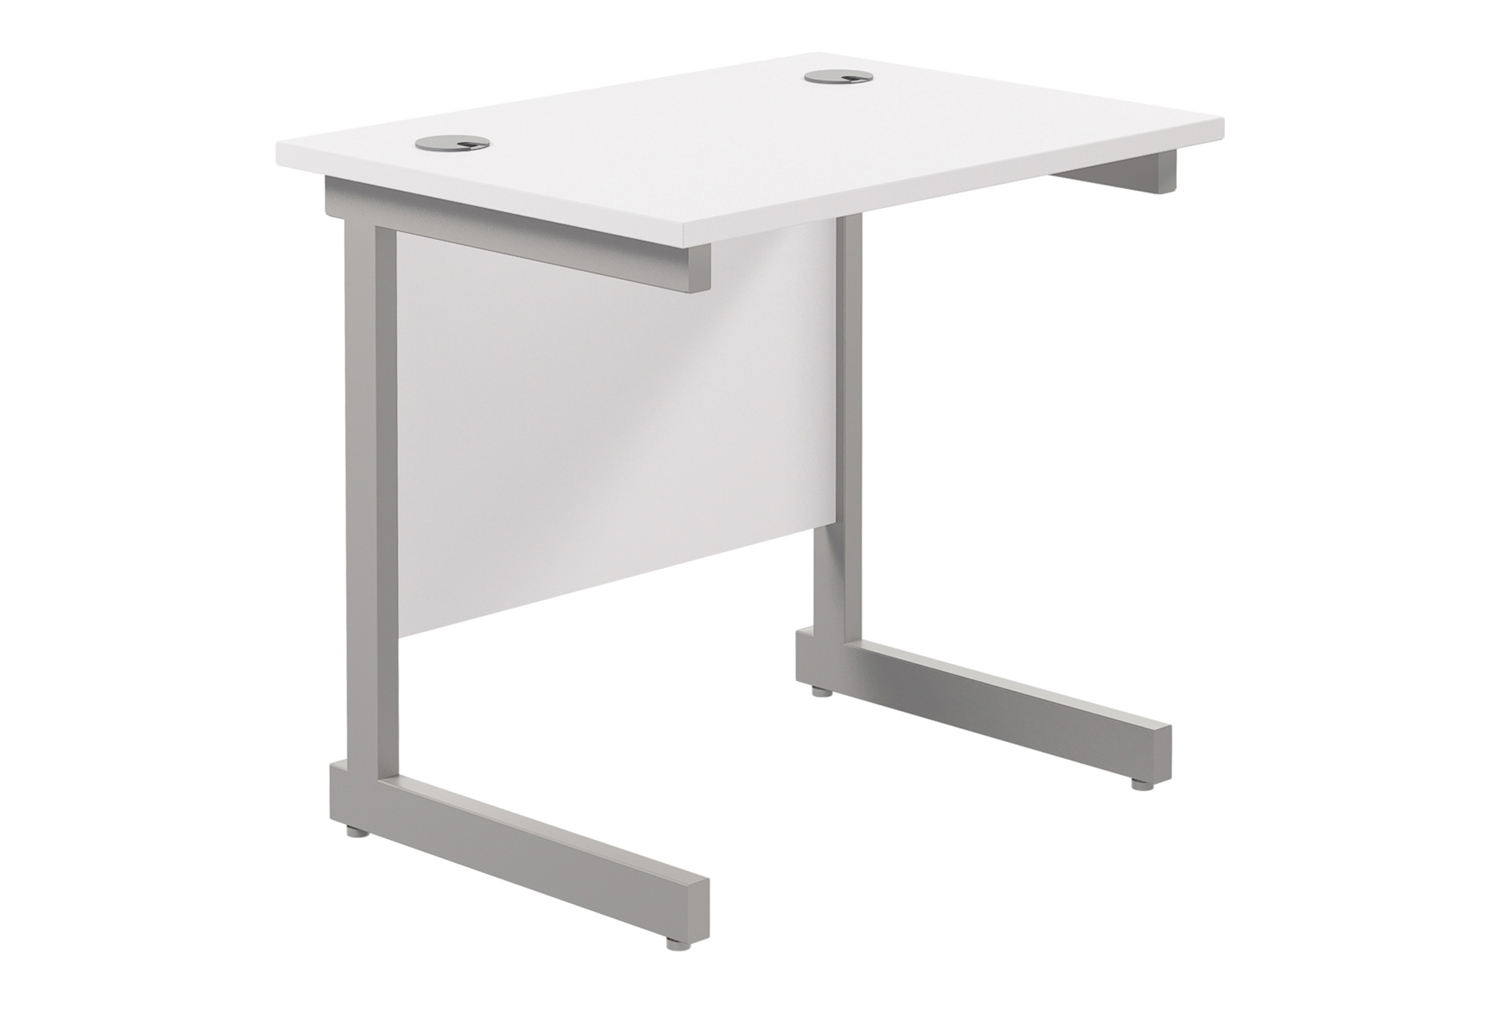 Proteus I Narrow Rectangular Office Desk, 80wx60dx73h (cm), Silver Frame, White